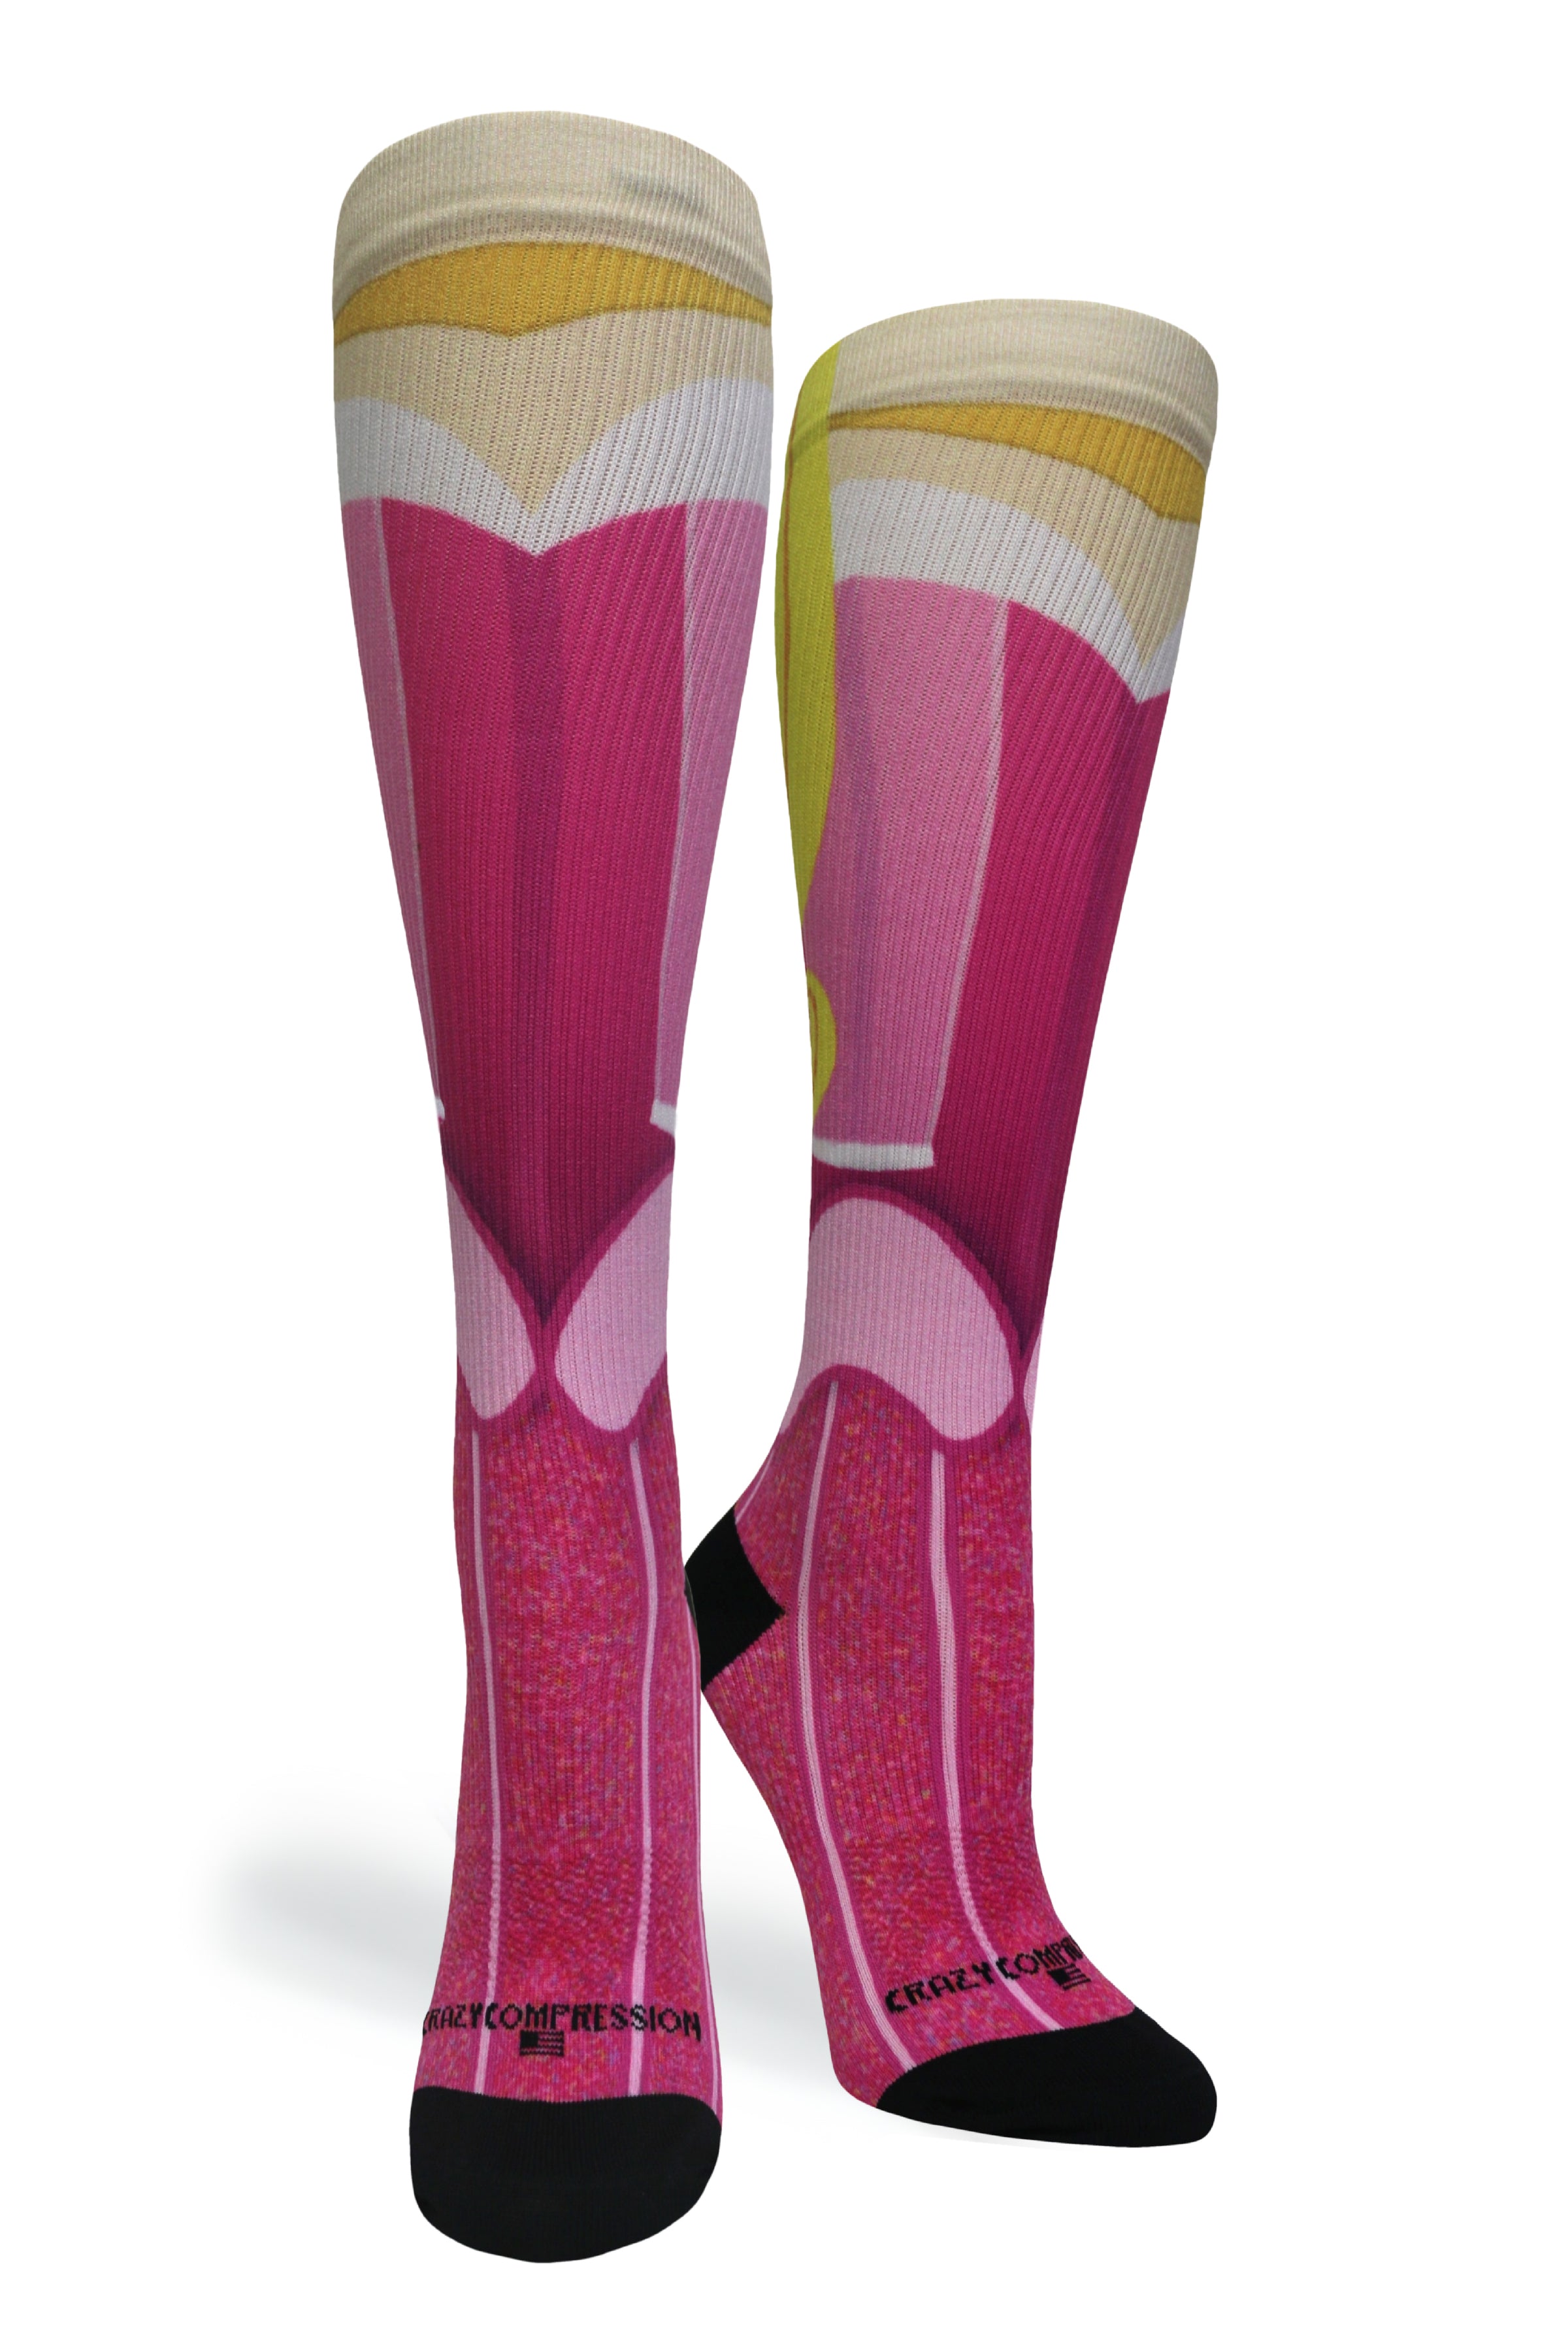 360 Rosey Princess OTC Compression Socks (Standard & Extra Wide)